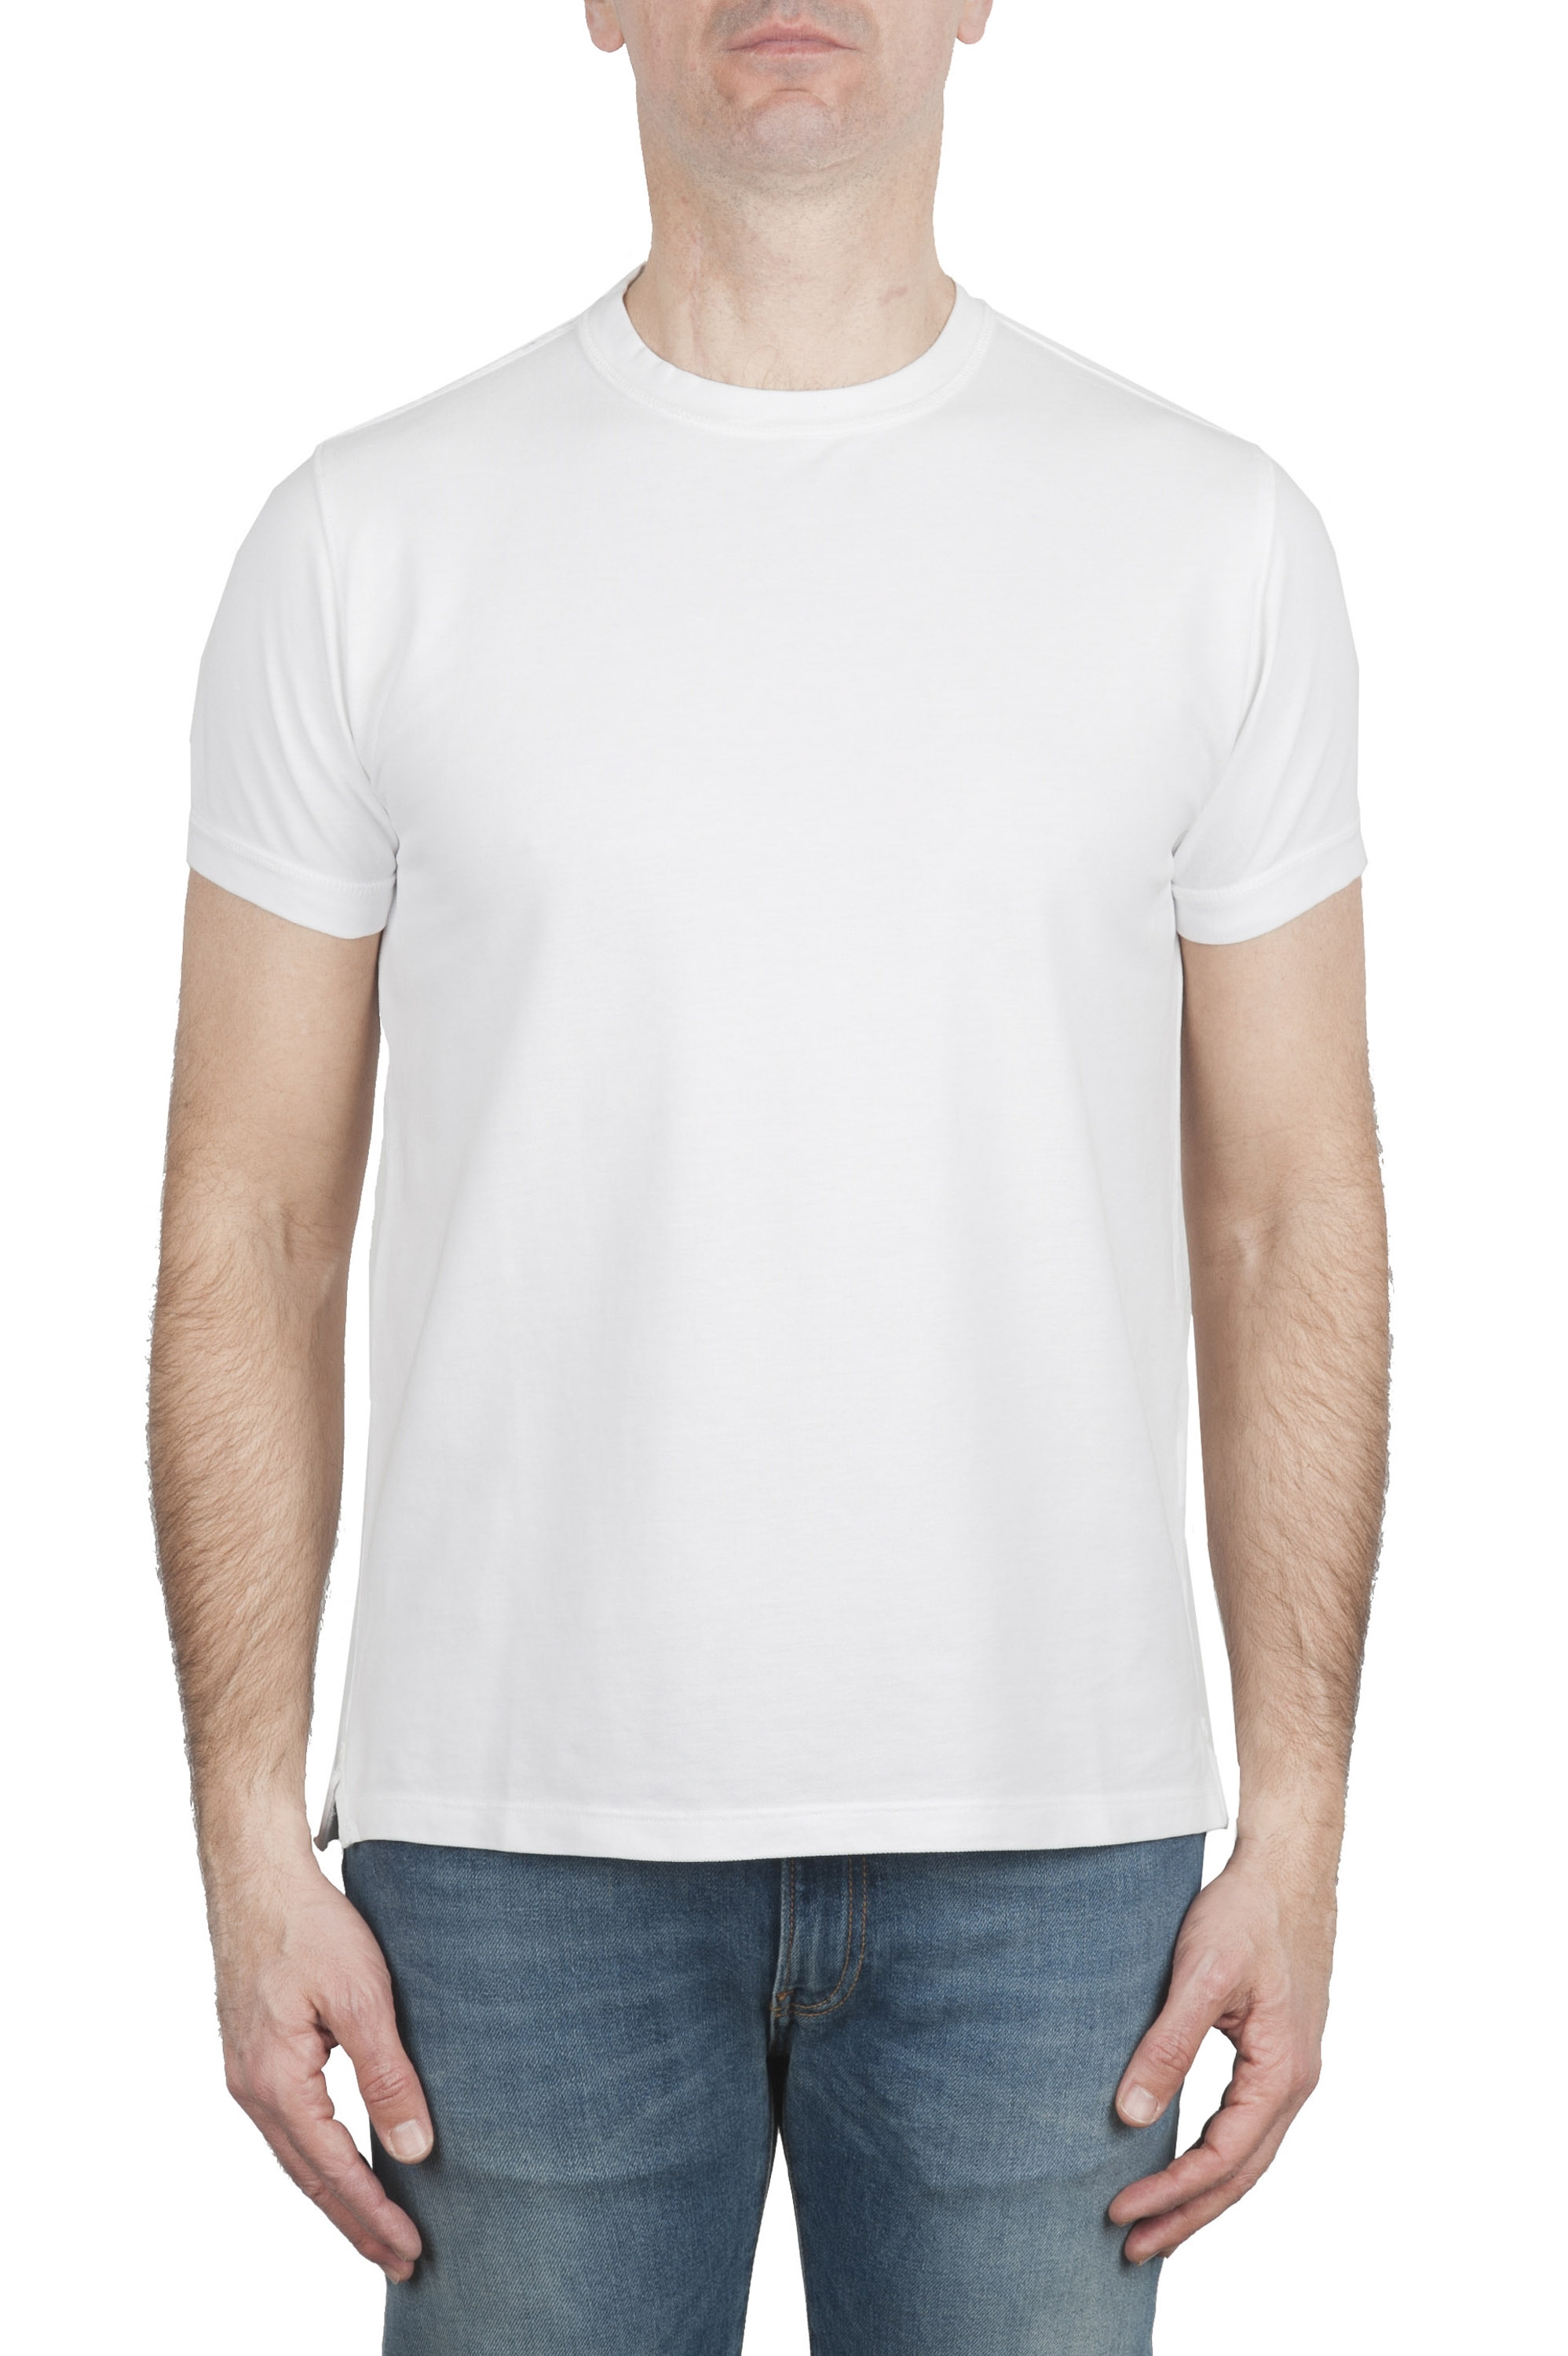 SBU 01990_2020SS Cotton pique classic t-shirt white 01